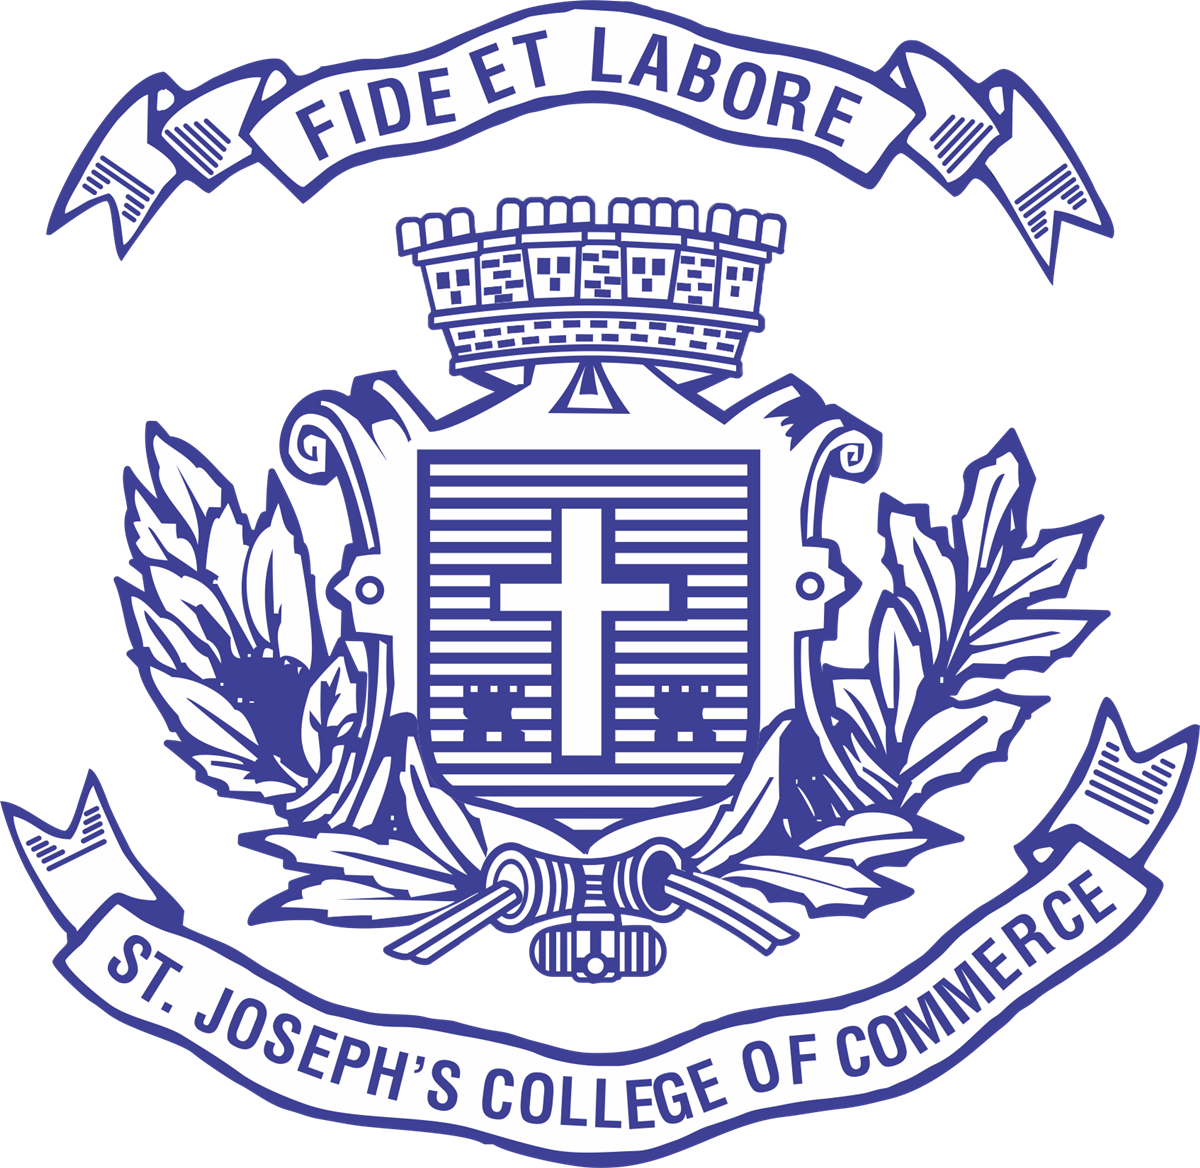 St. Joseph's College of Commerce